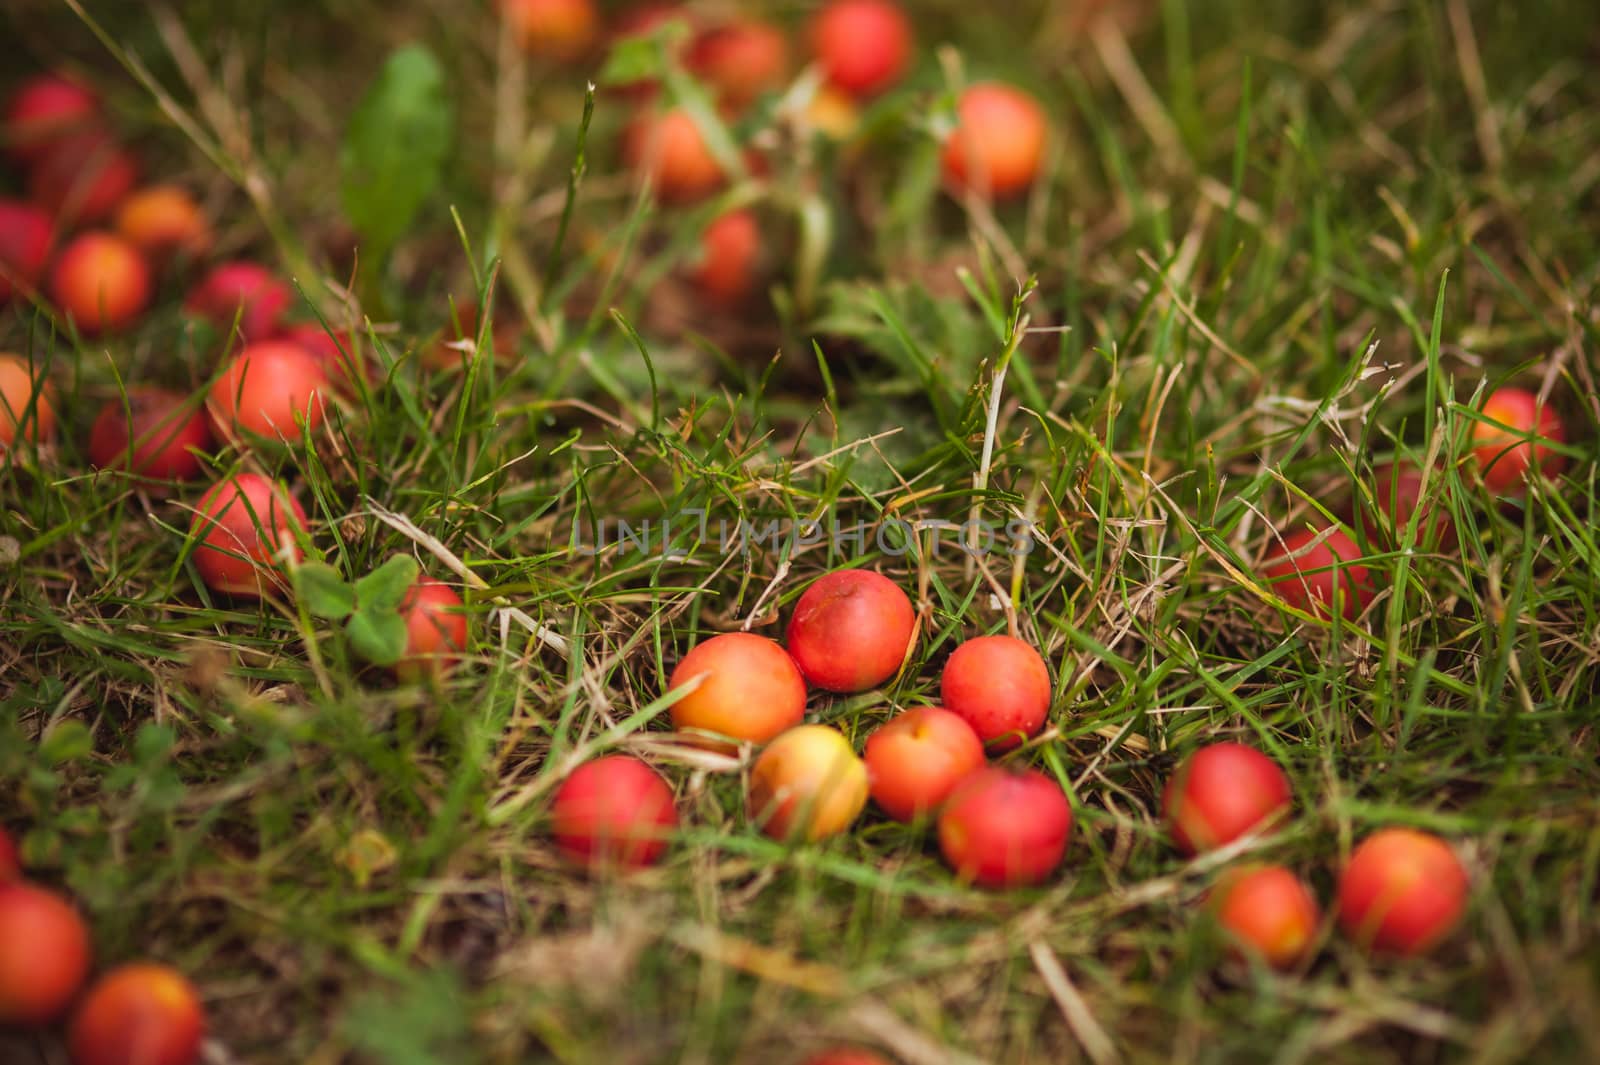 wild yellow plum in grass by fesenko